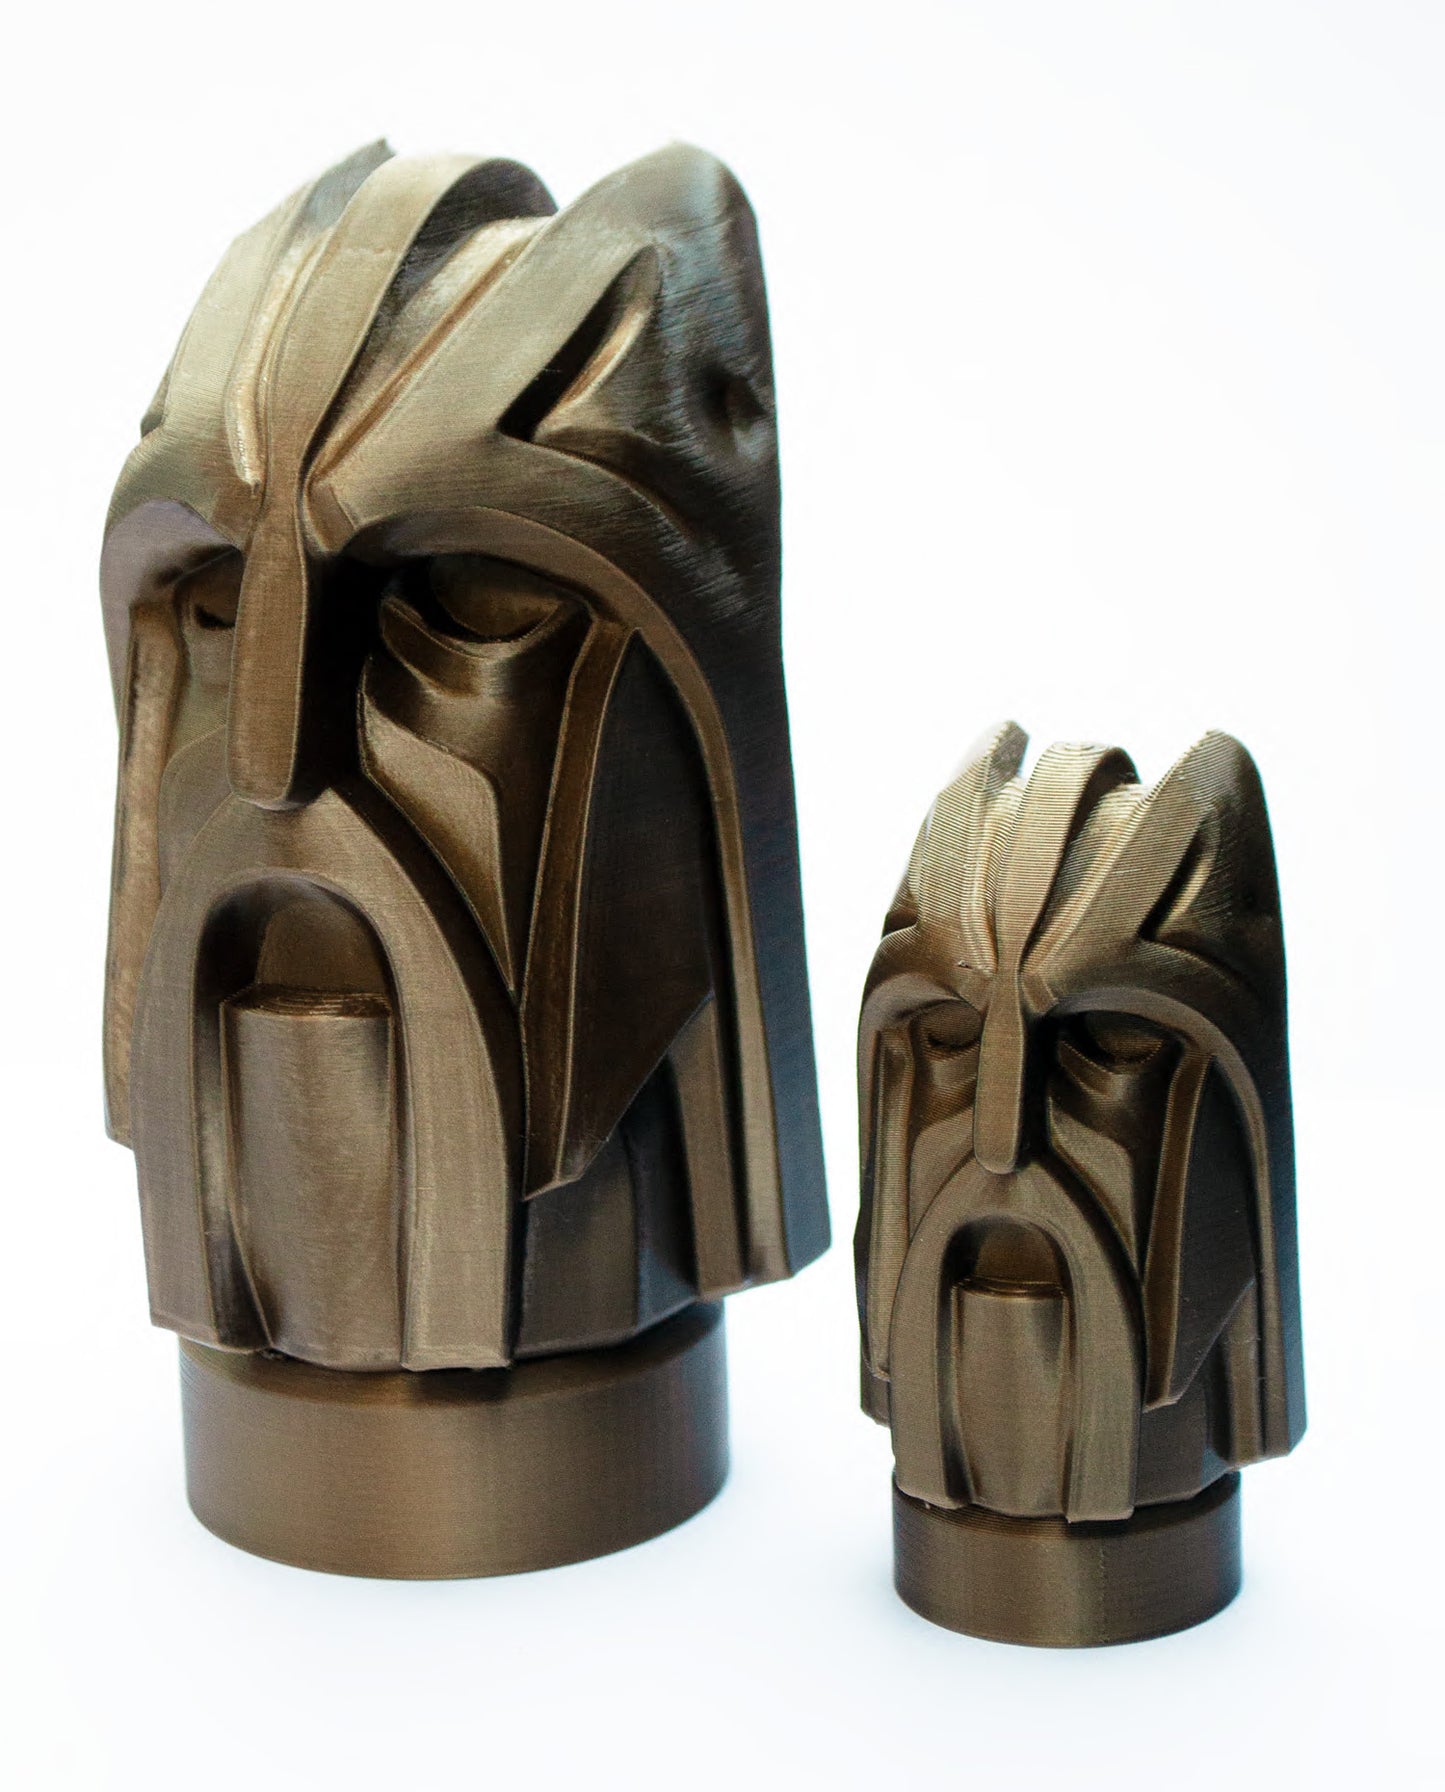 Soul Totem - Bronze 3D Print Model